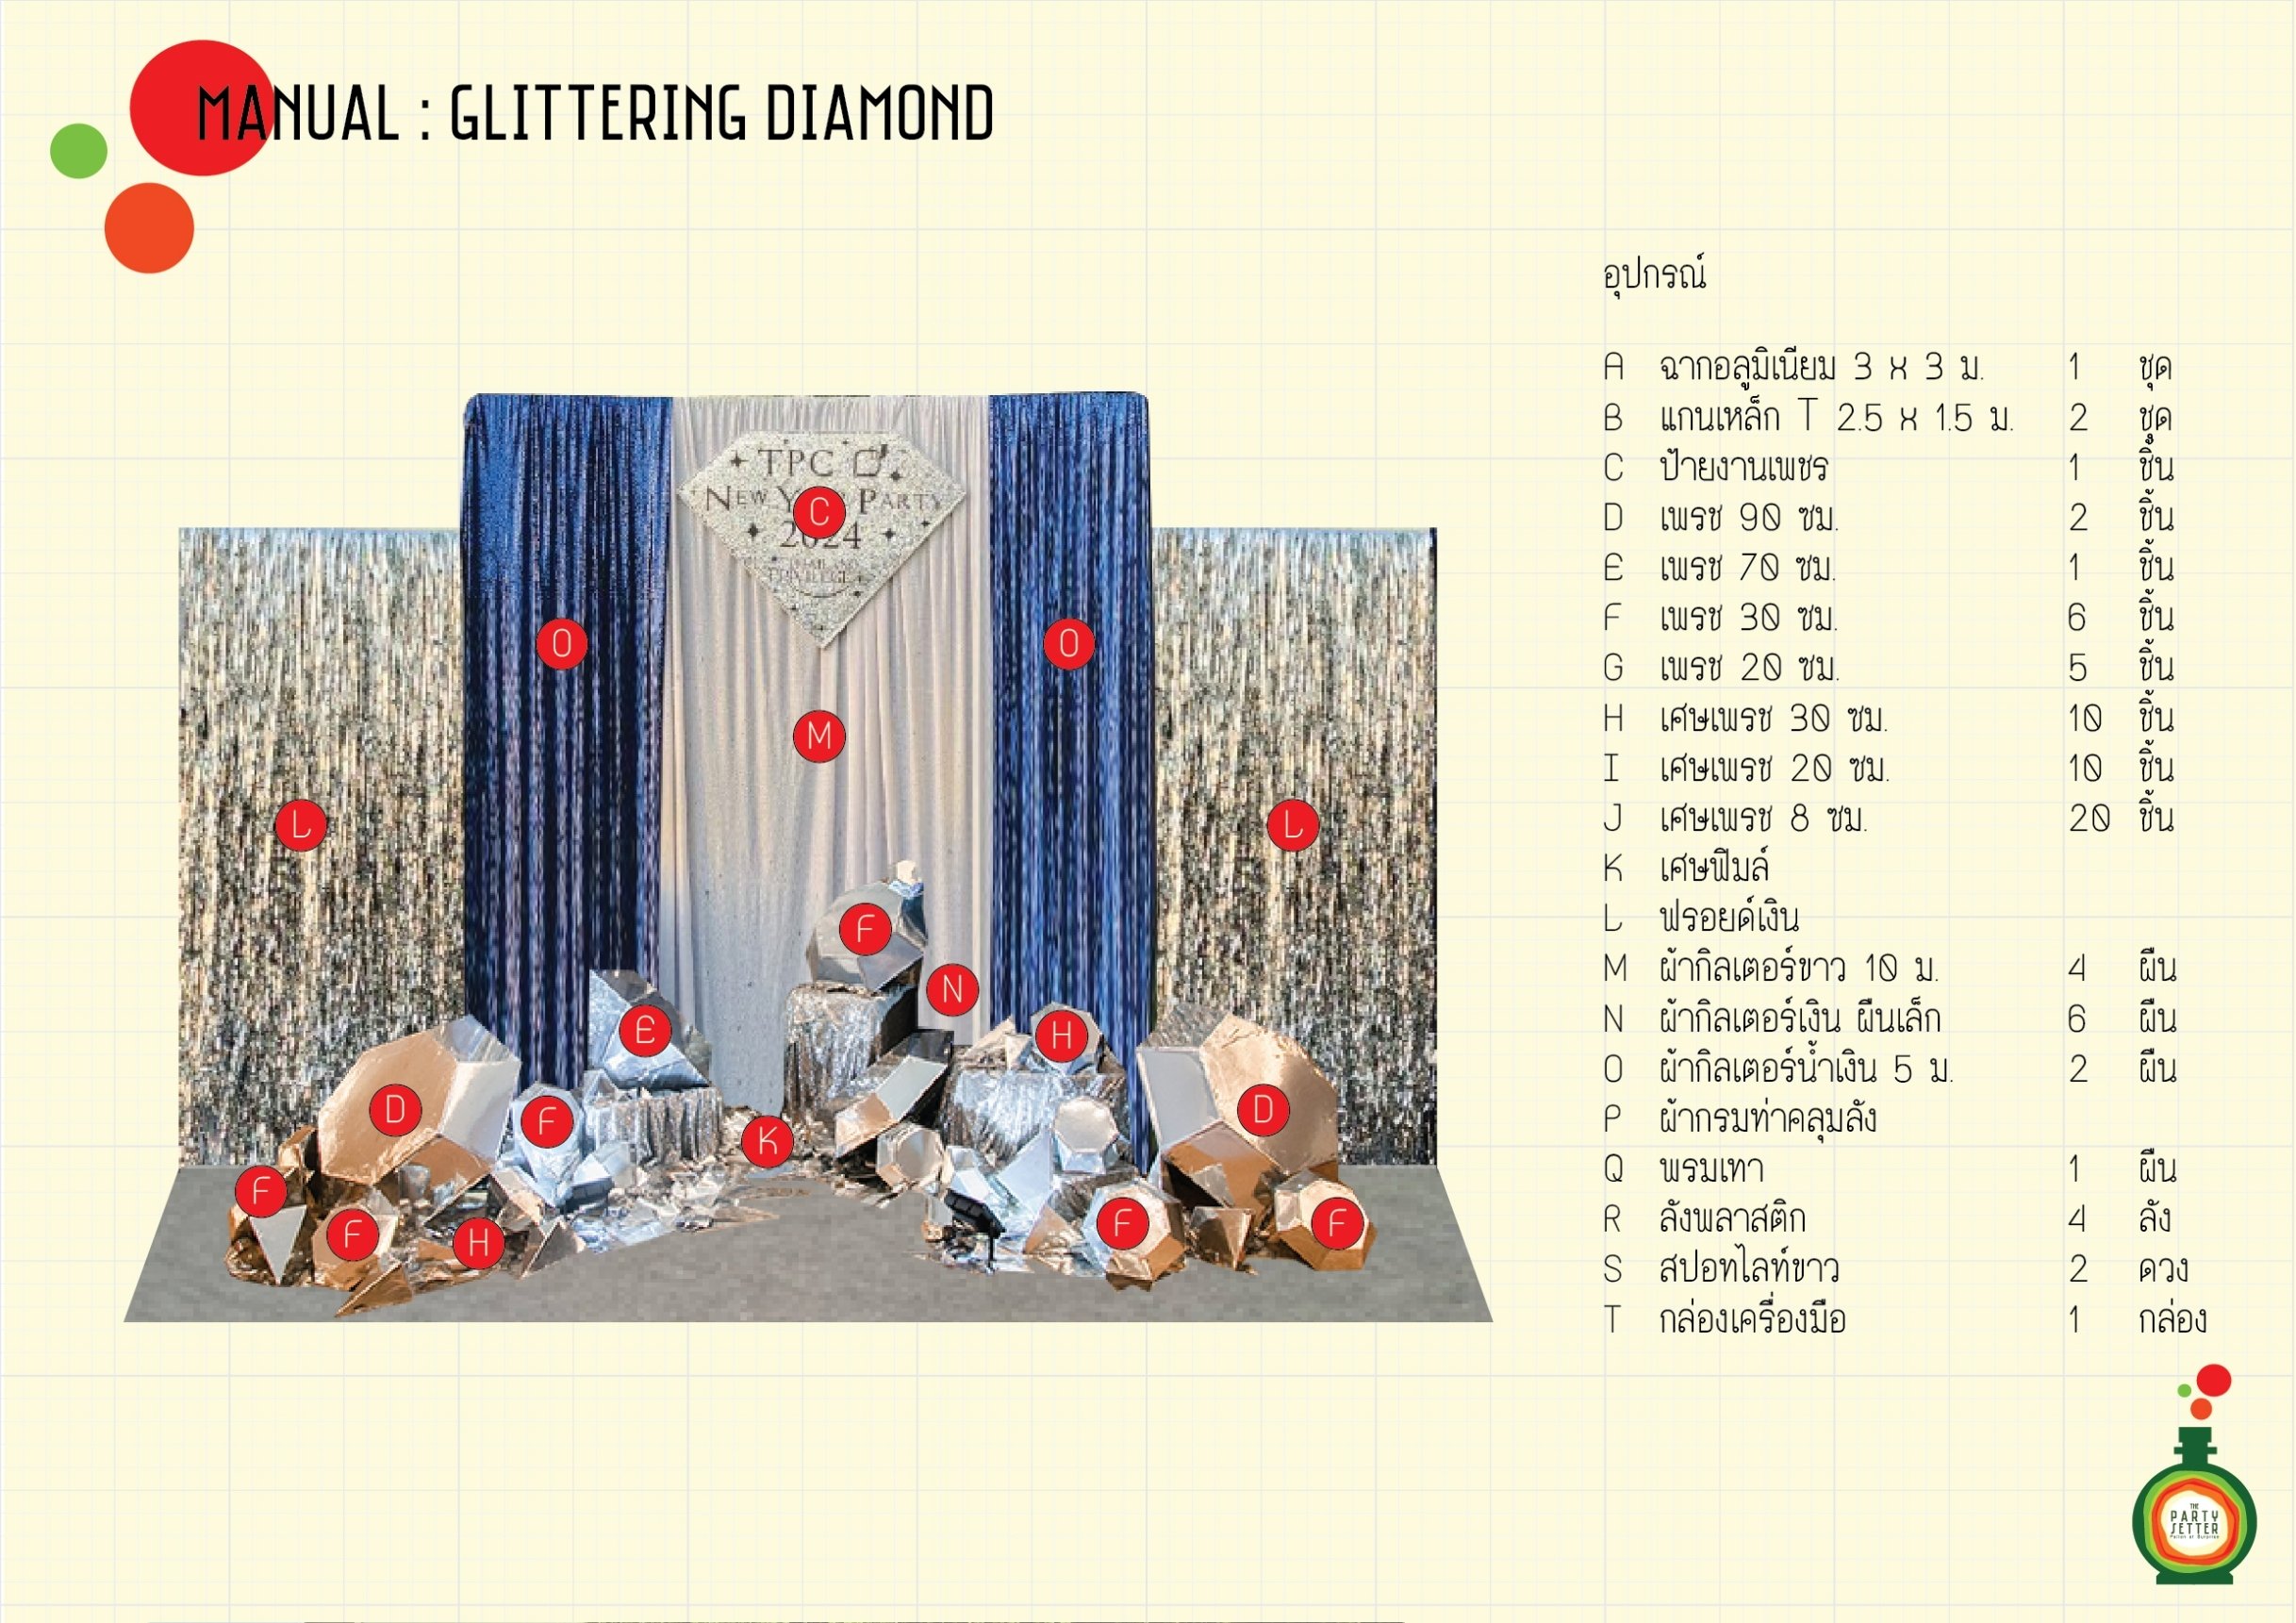 Manual_Glittering Diamond-00-01.jpg